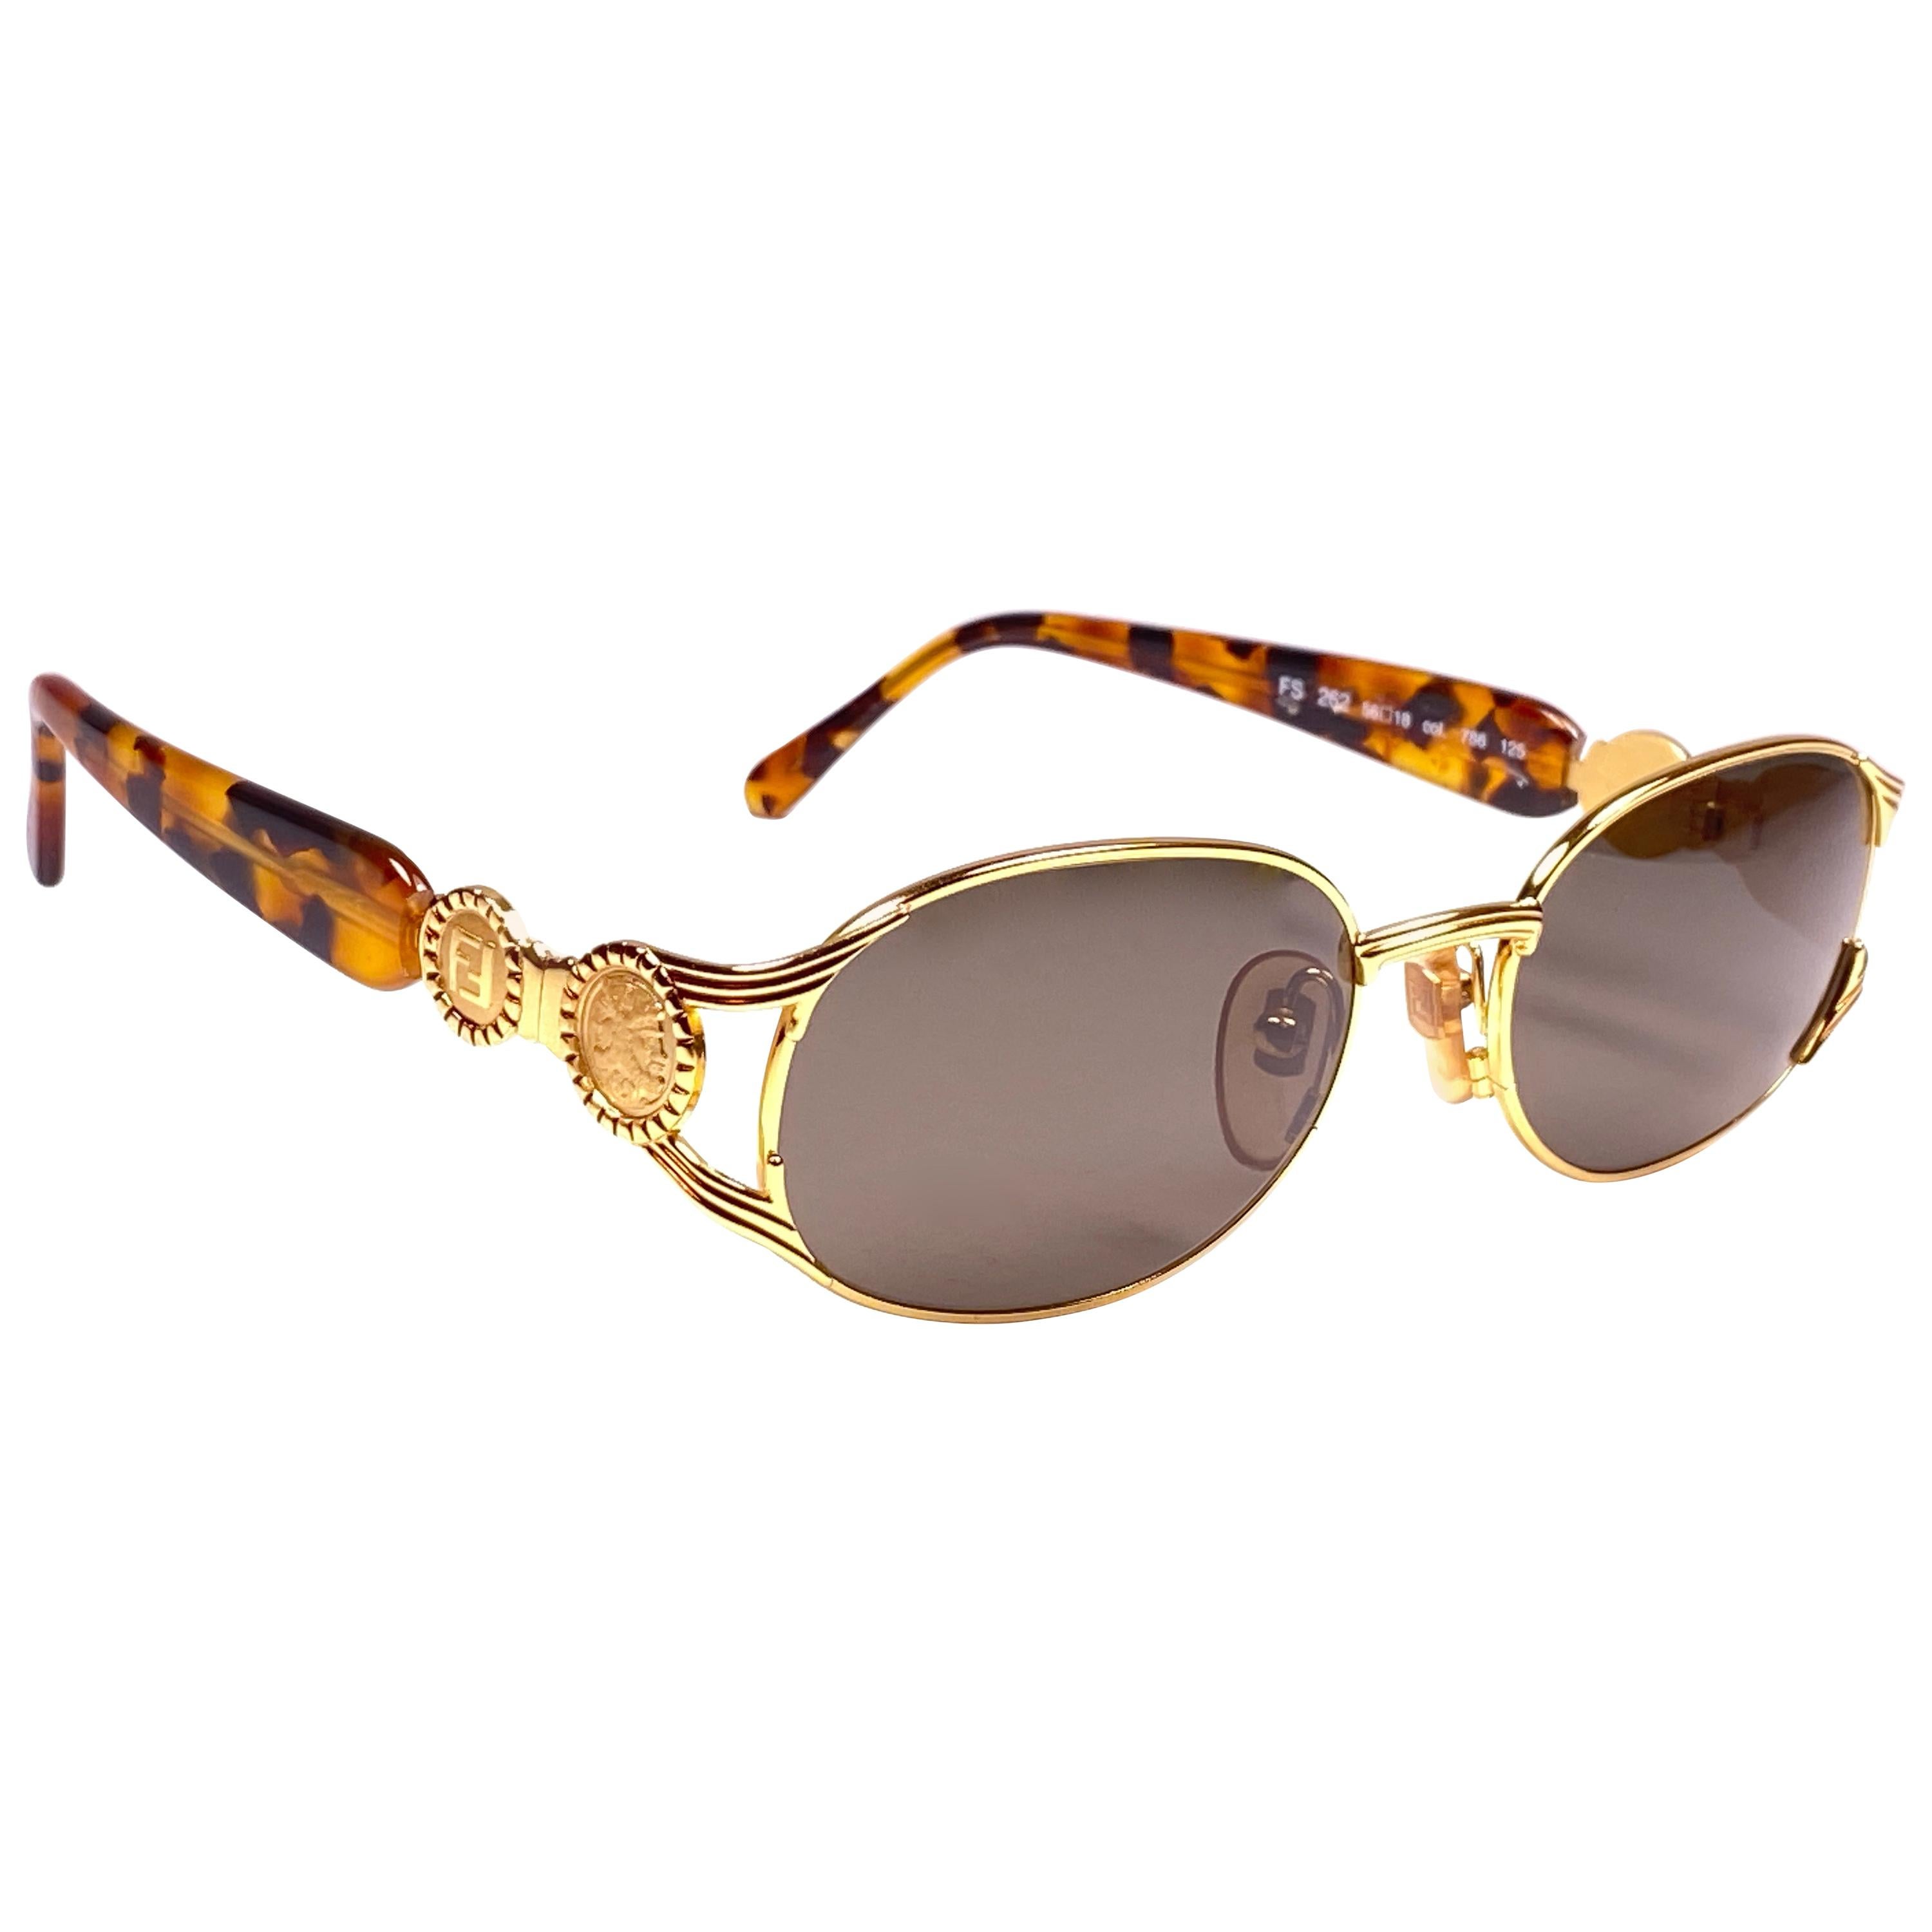 New Vintage Fendi FS262 Tortoise & Gold  1990 Sunglasses Made in Italy